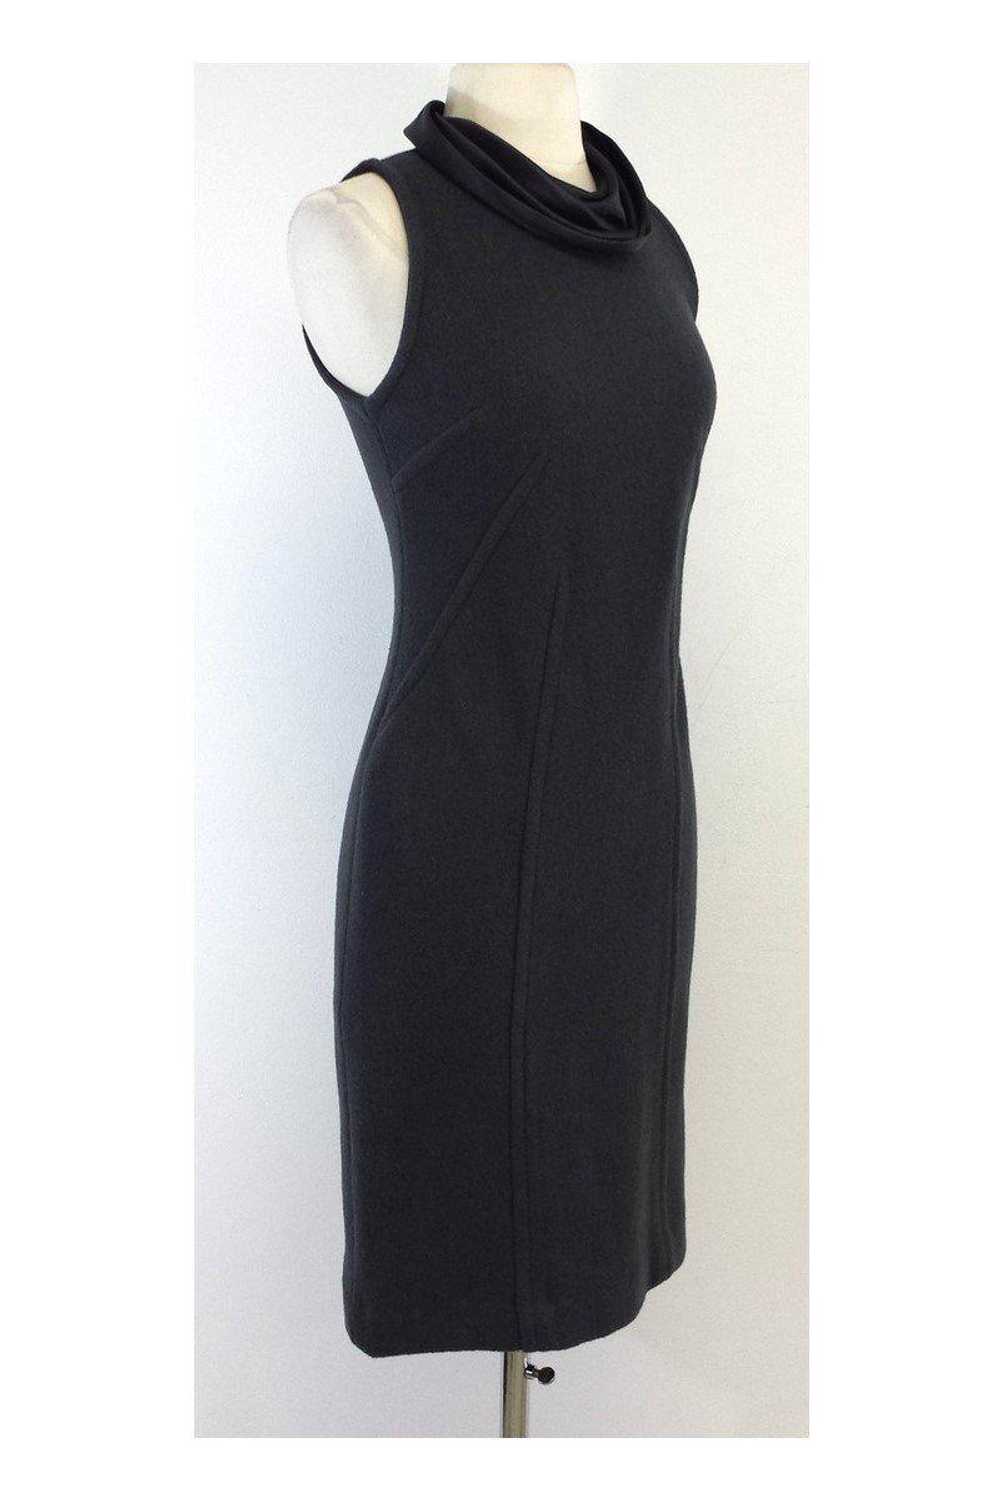 Giorgio Armani - Grey Wool Sleeveless Dress Sz 4 - image 2